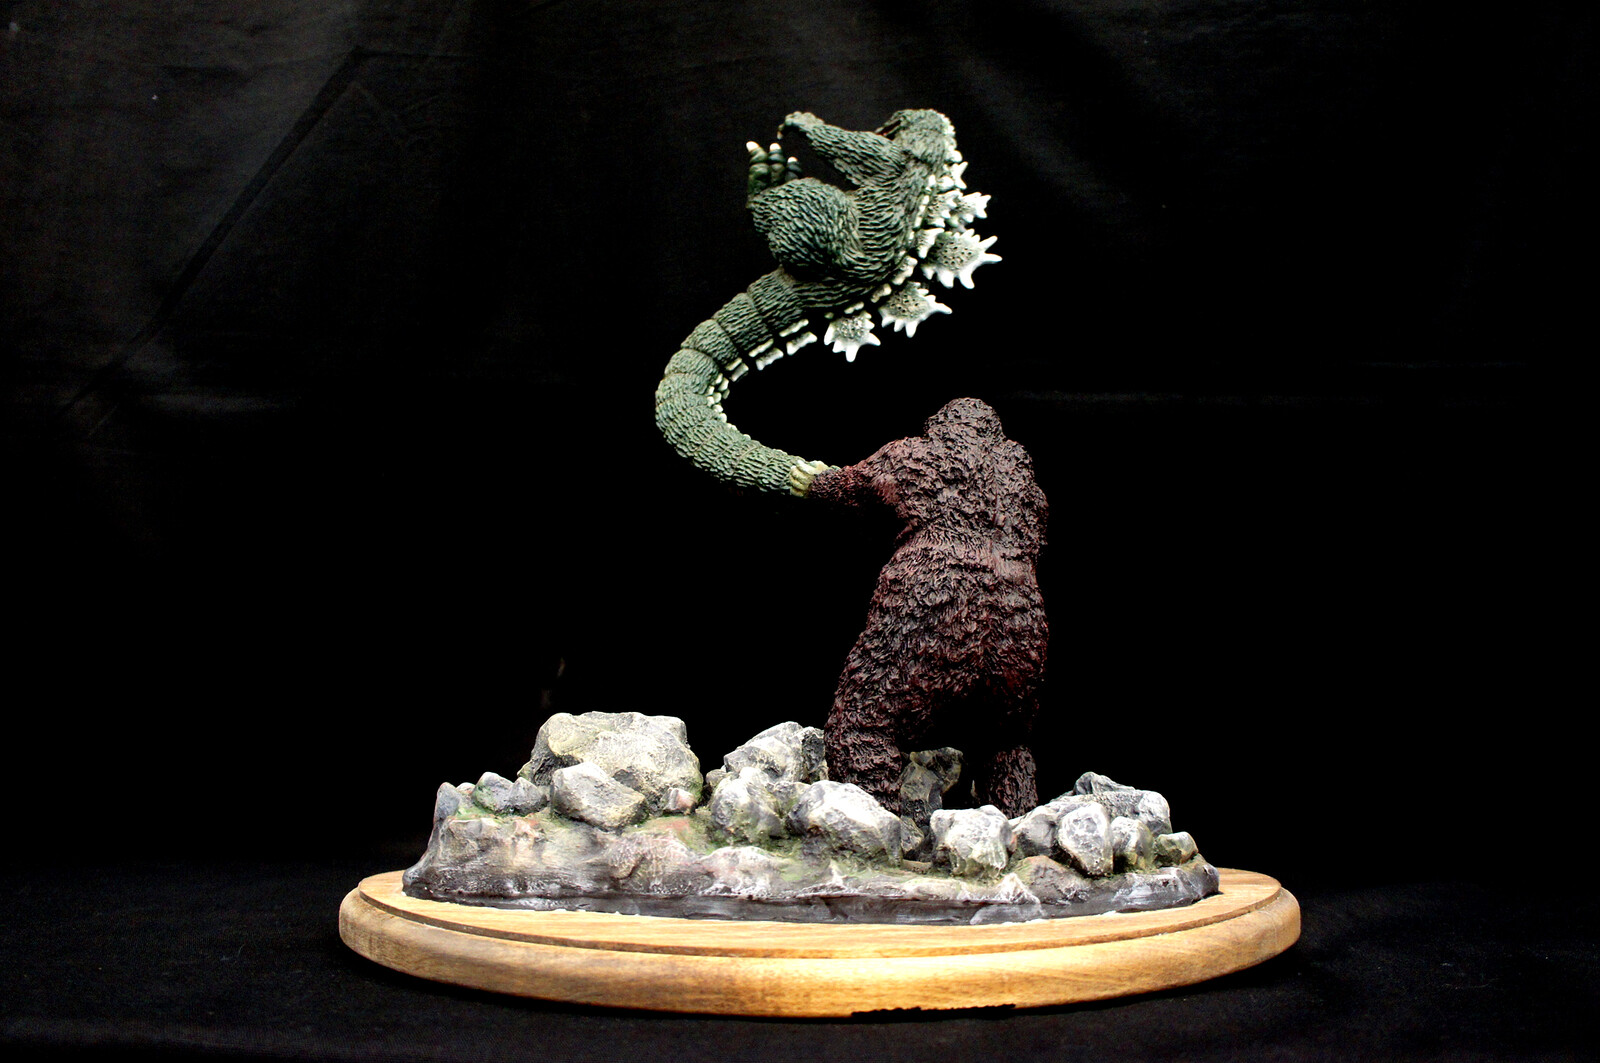 Godzilla vs Kong Art Statue キングコング対ゴジラ
https://www.solidart.club/